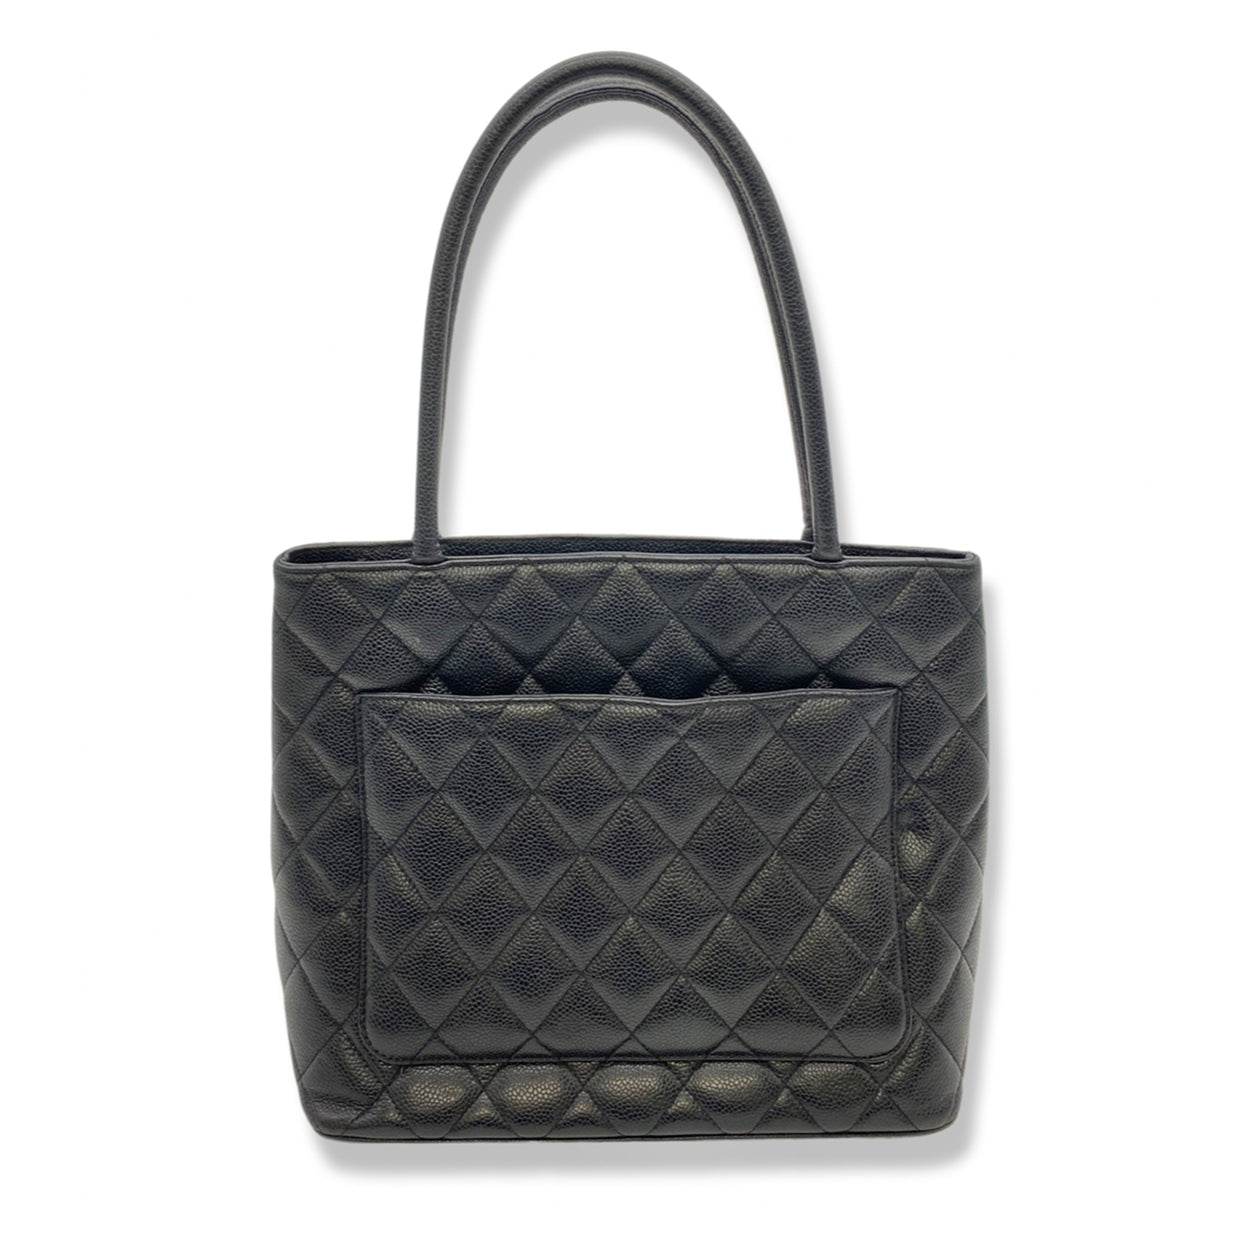 Chanel - Authenticated Handbag - Plastic Black for Women, Never Worn